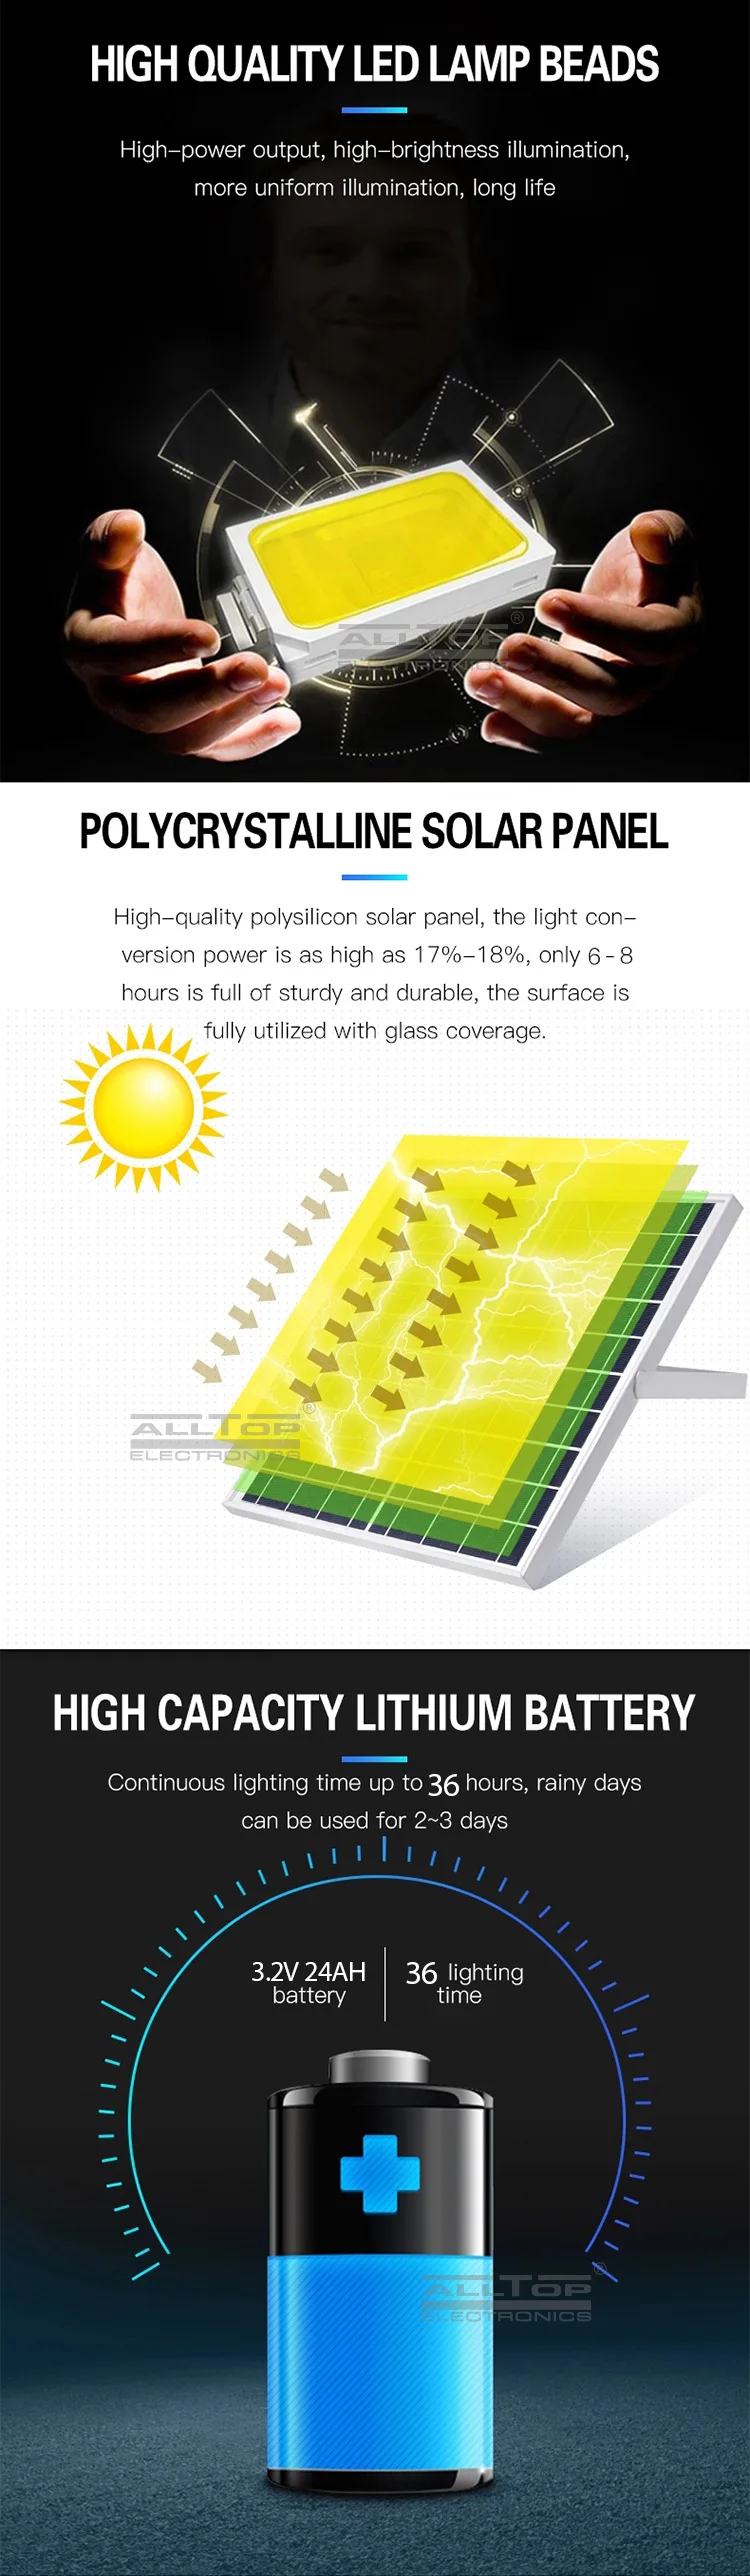 ALLTOP High performance ip65 waterproof 30w 60w 90w sensor LED Solar Street Light